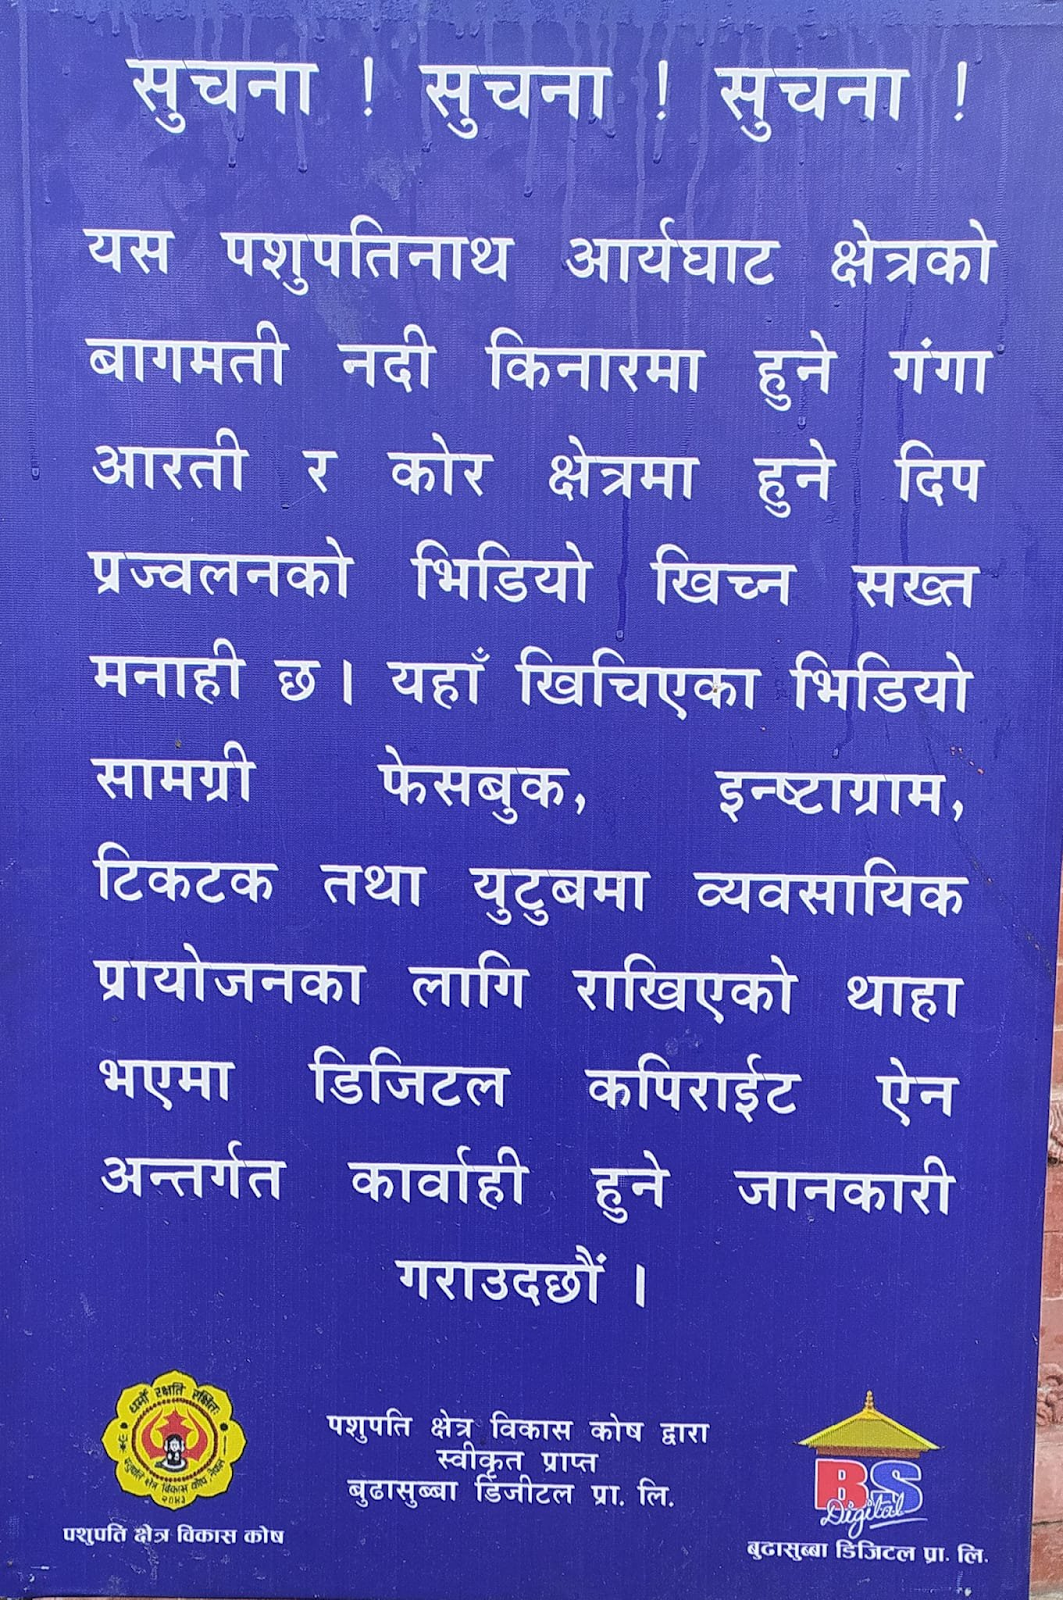 Budha Subba Digital's notice on Pashupati Aarati video copyright